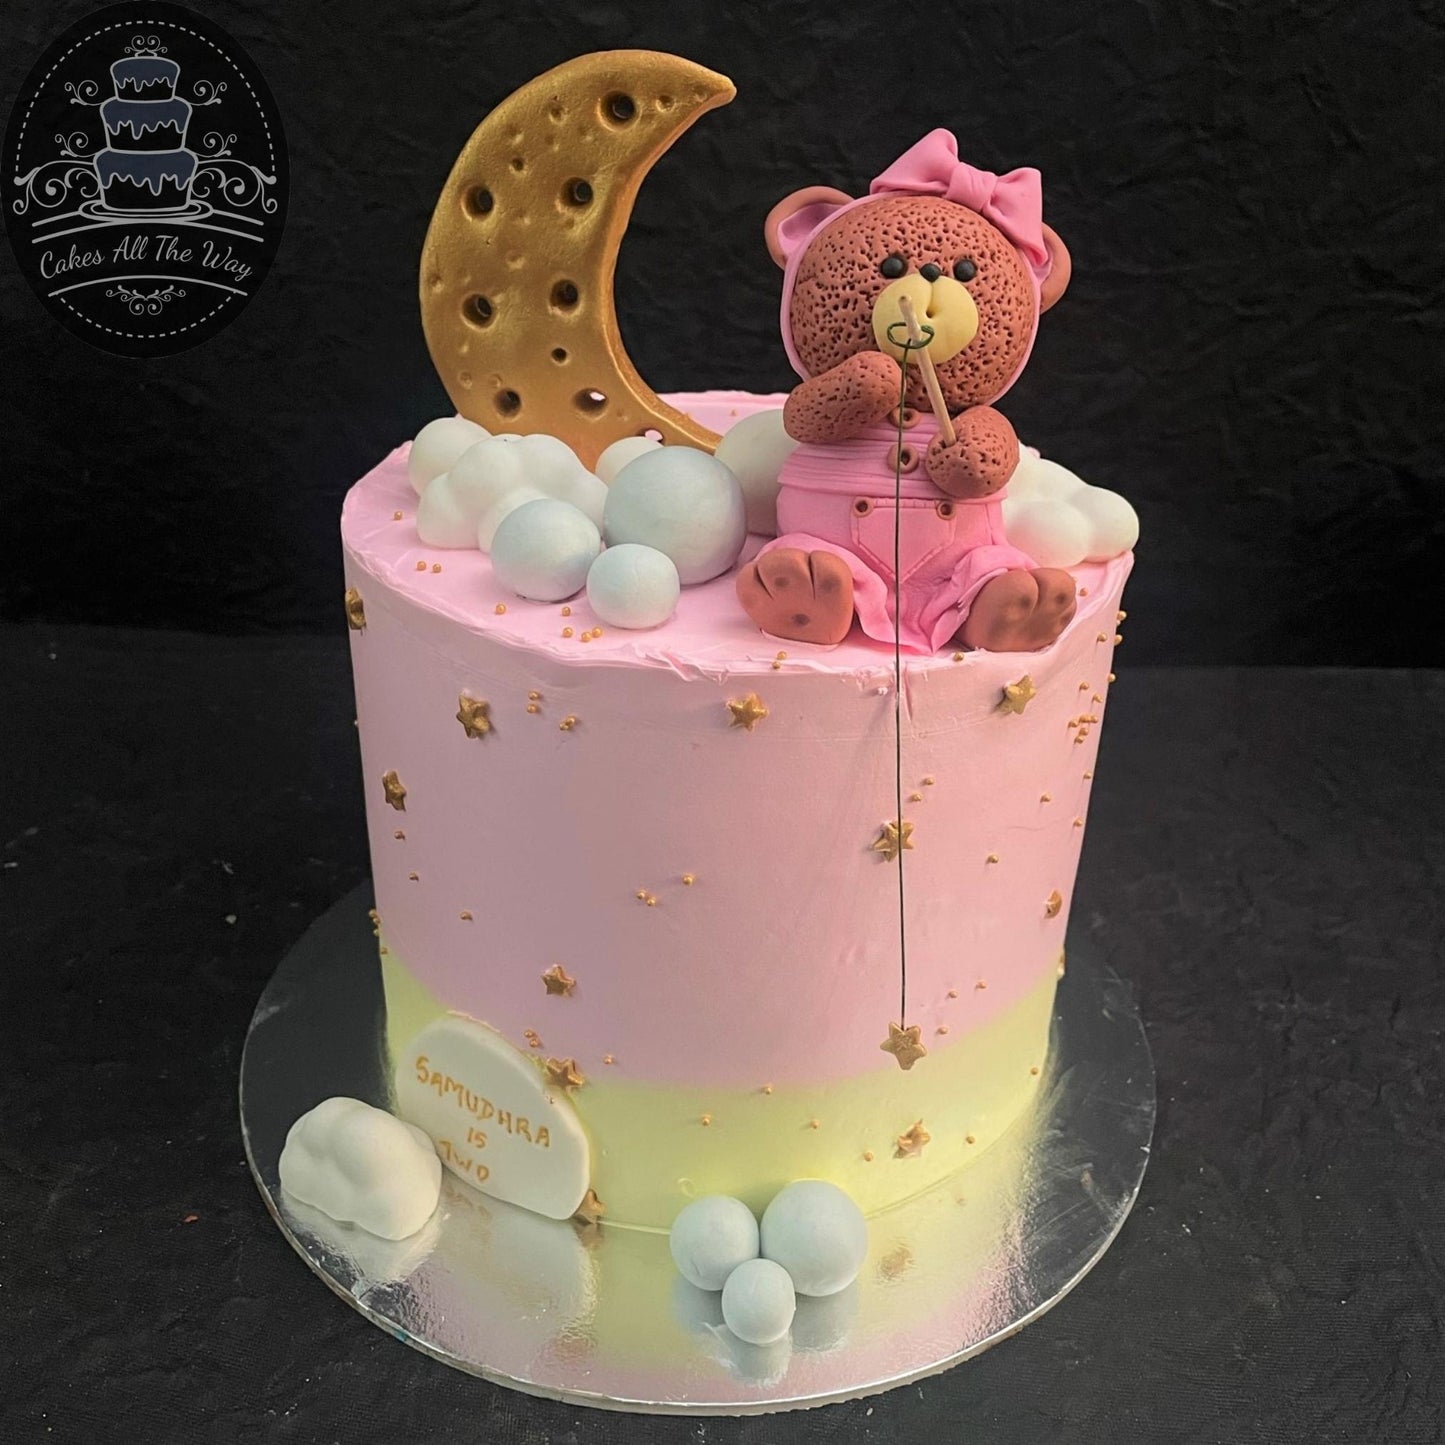 Small Teddy and Half Moon Theme Cake